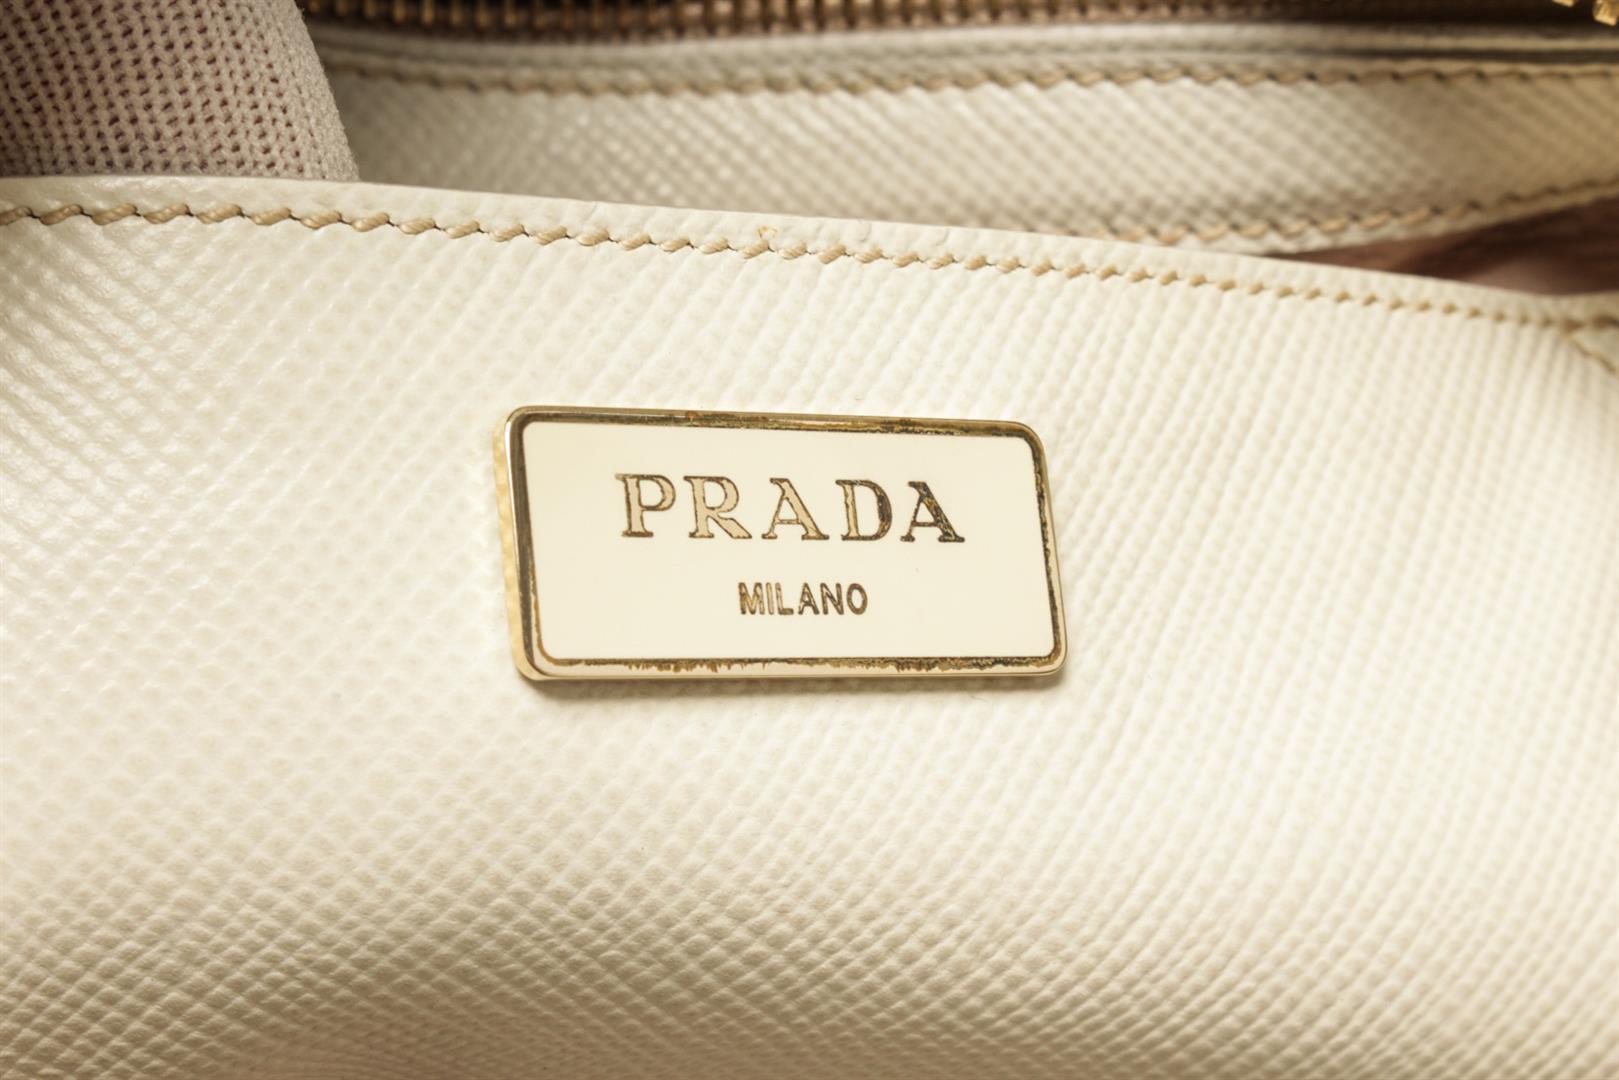 Prada White Leather Tote Bag